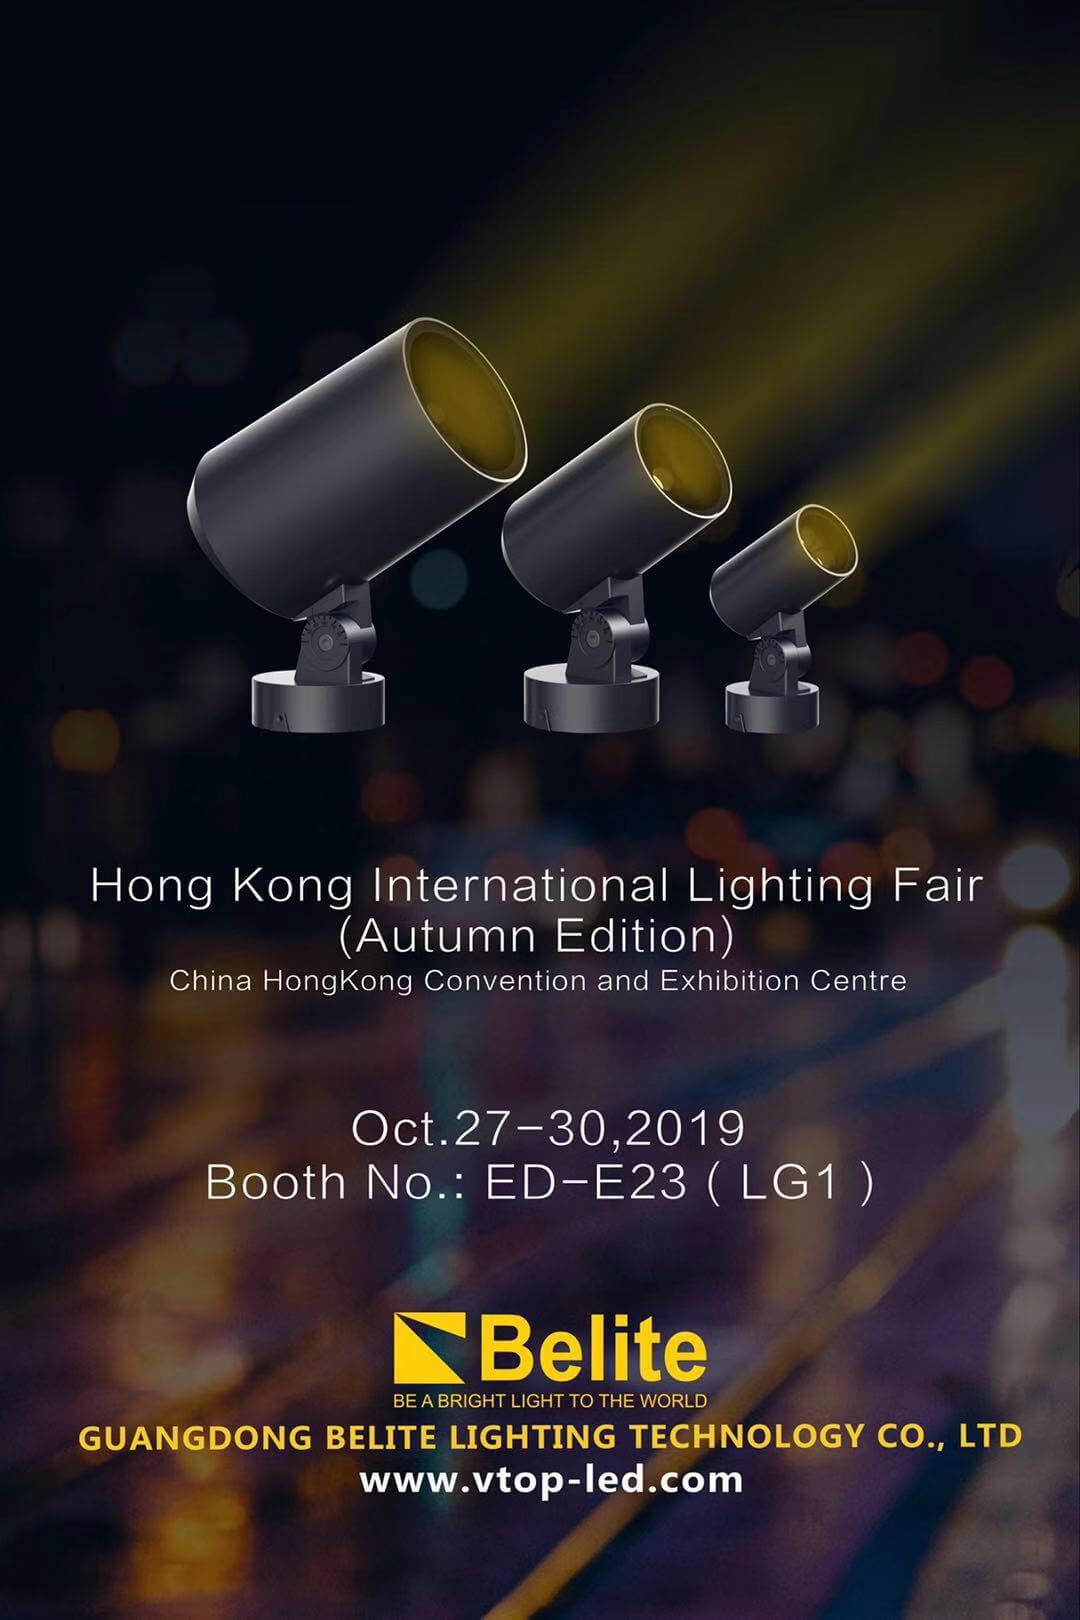 Hong Kong International Lighting Fair Invitation